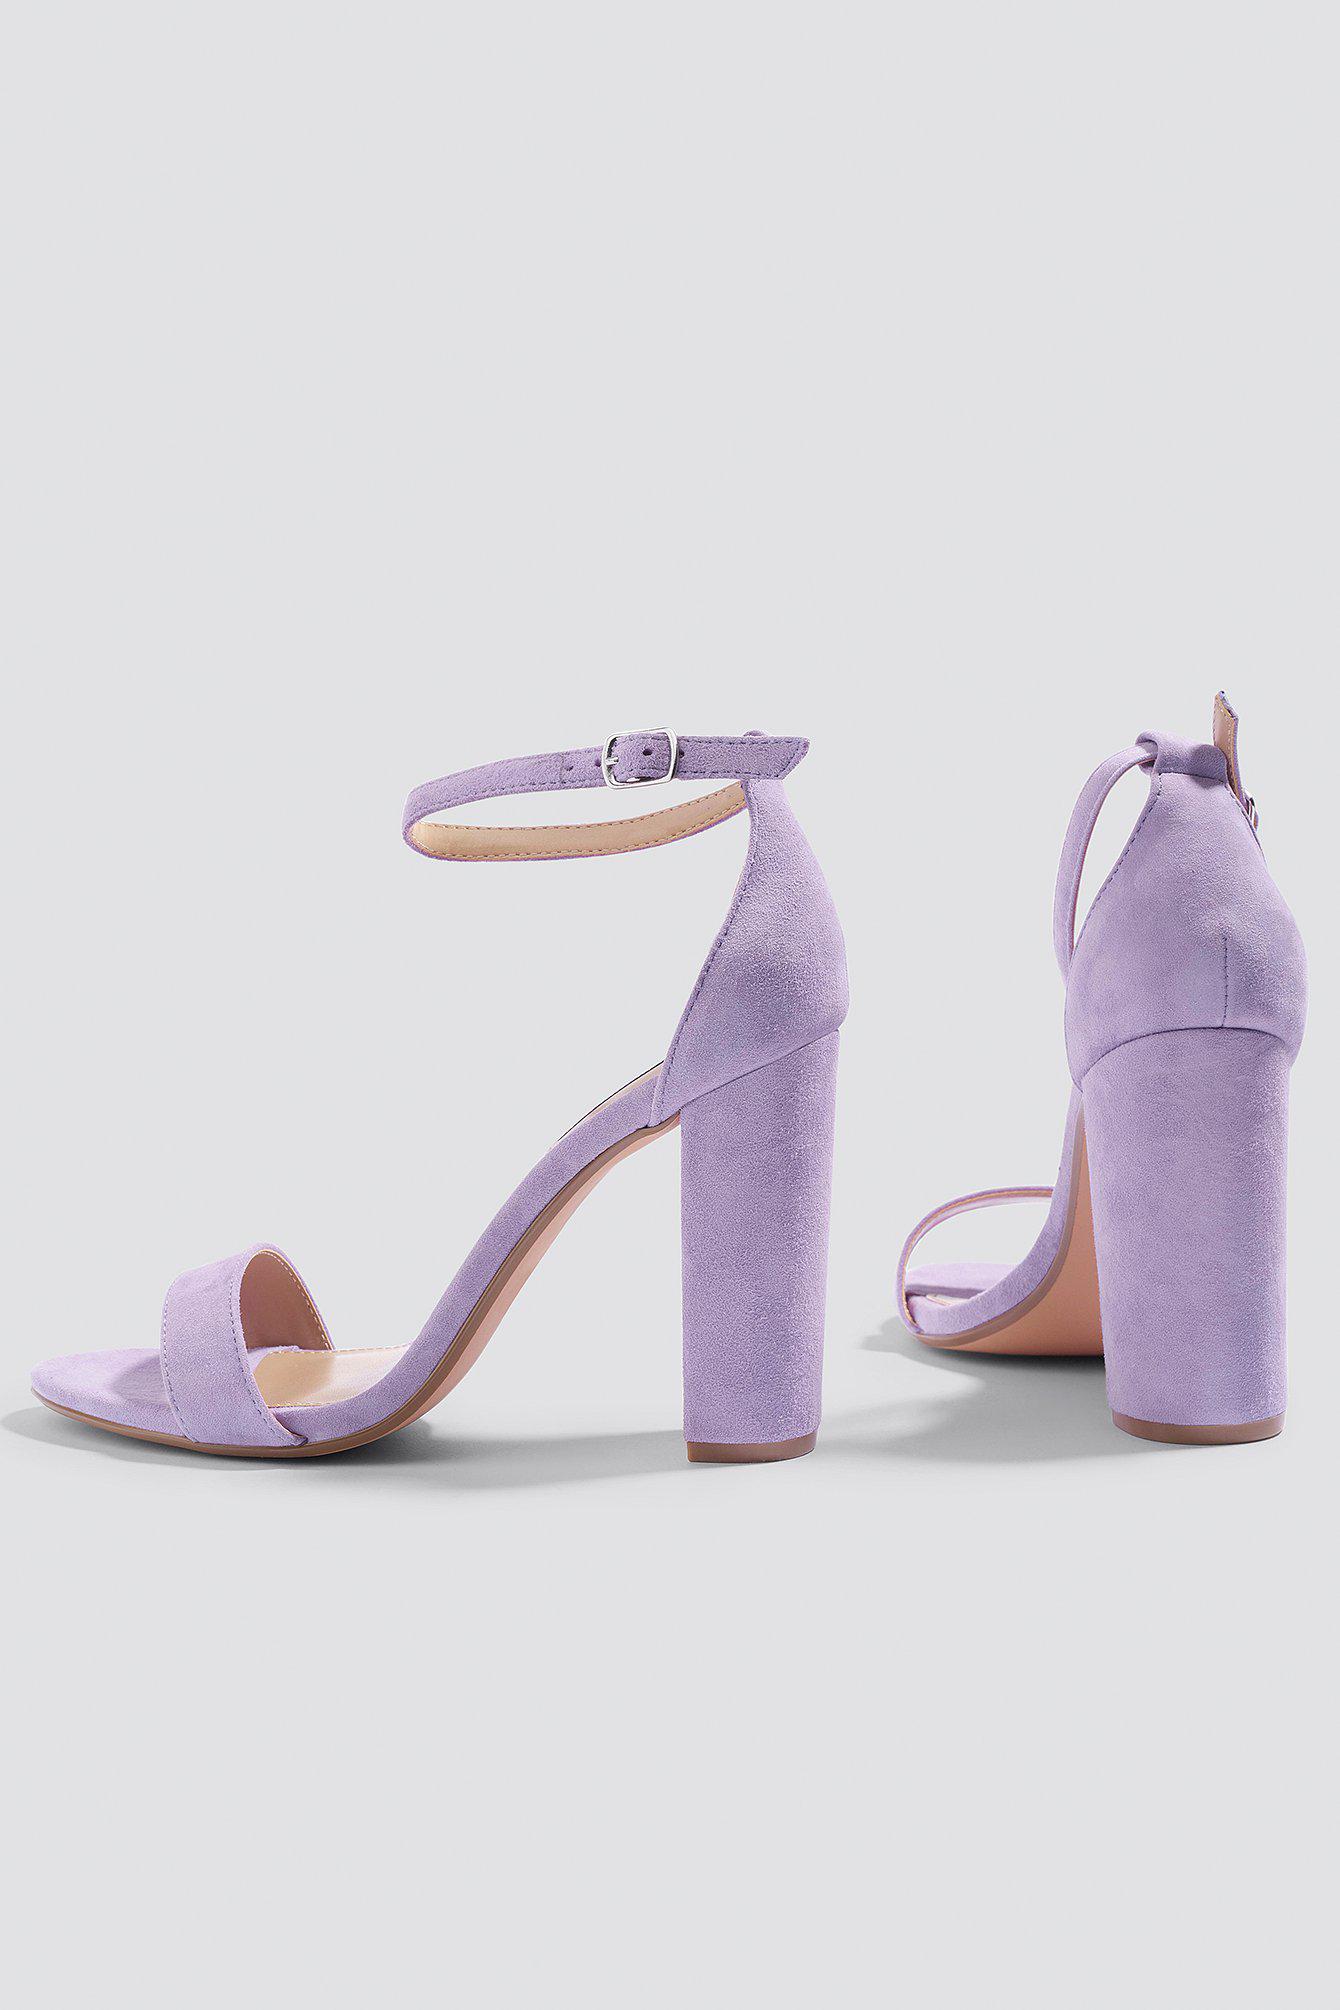 Steve Madden Carrson Sandal in Purple | Lyst